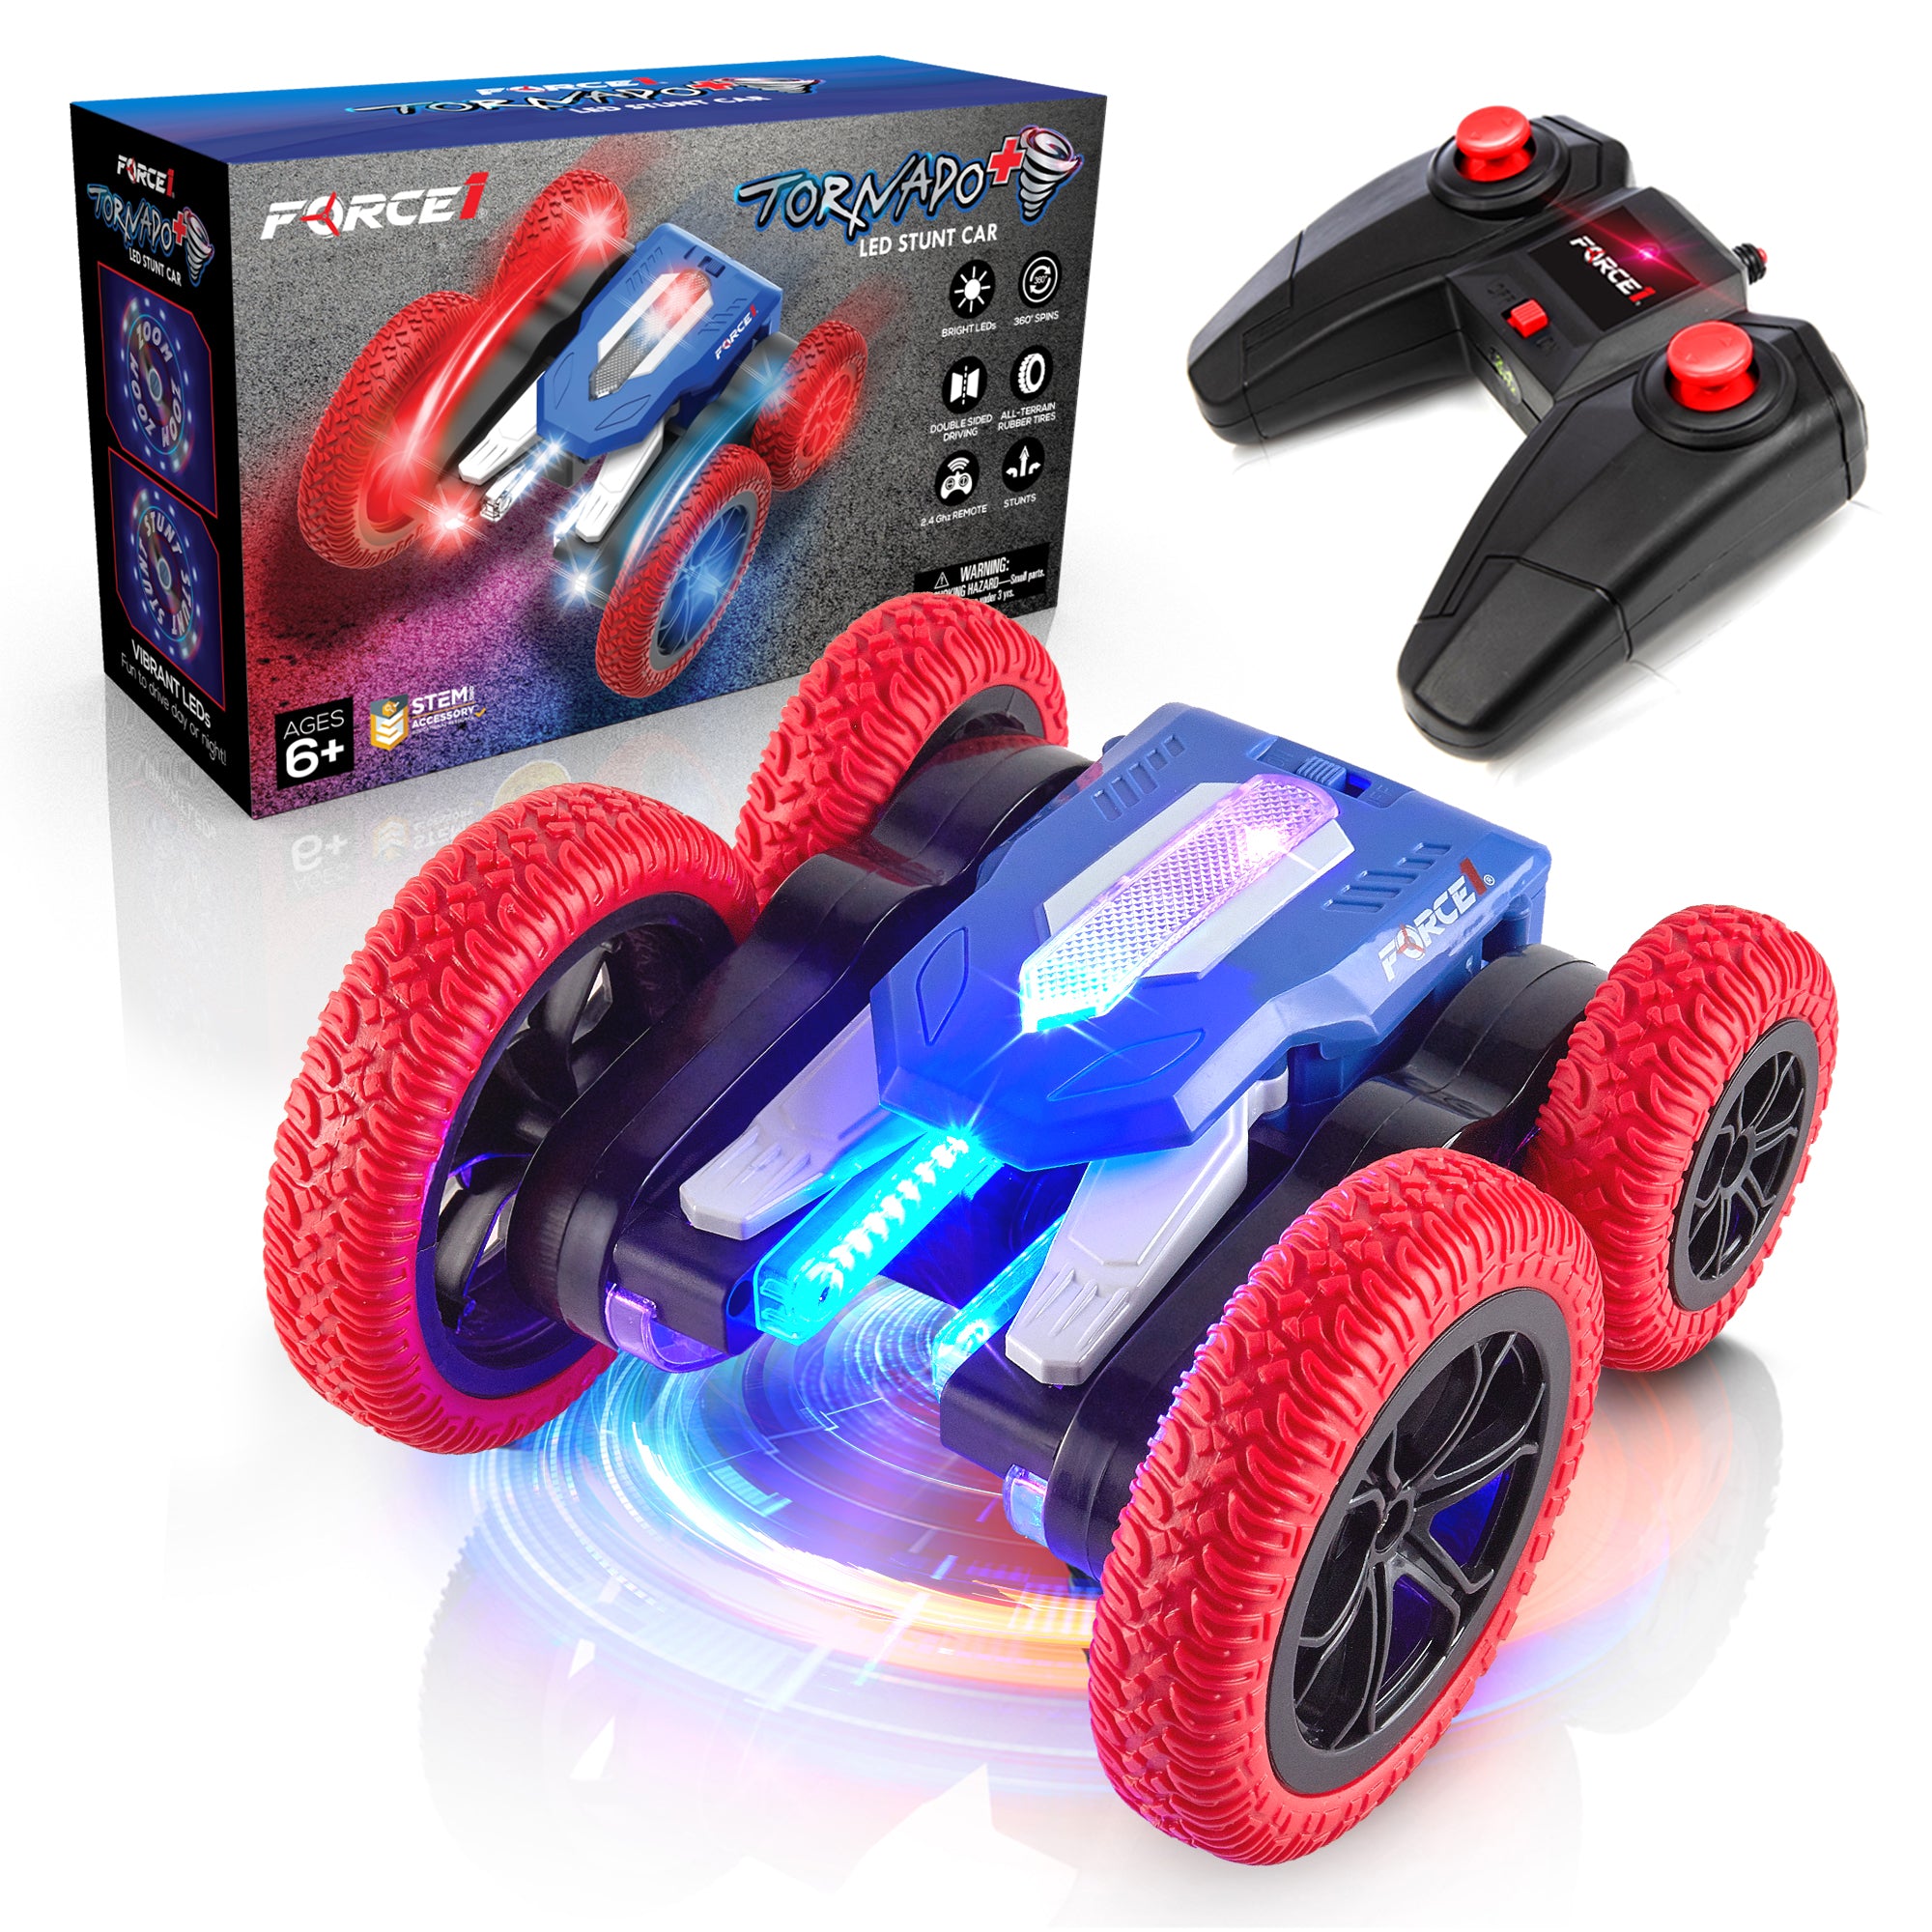 Force1 Tornado+ LED Remote Control Car for Kids